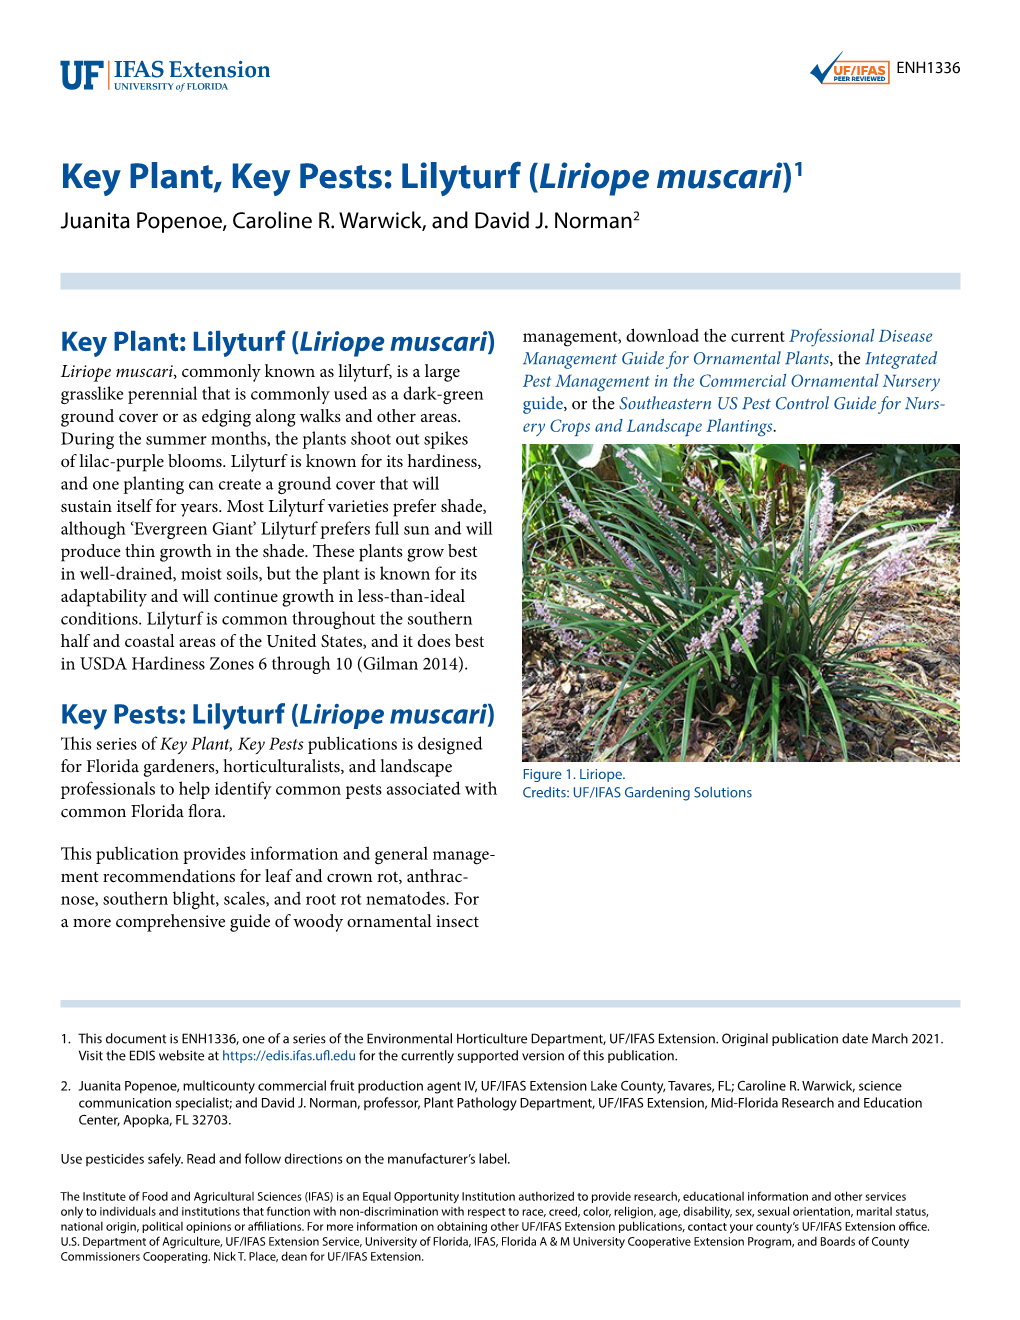 Key Plant, Key Pests: Lilyturf (Liriope Muscari)1 Juanita Popenoe, Caroline R